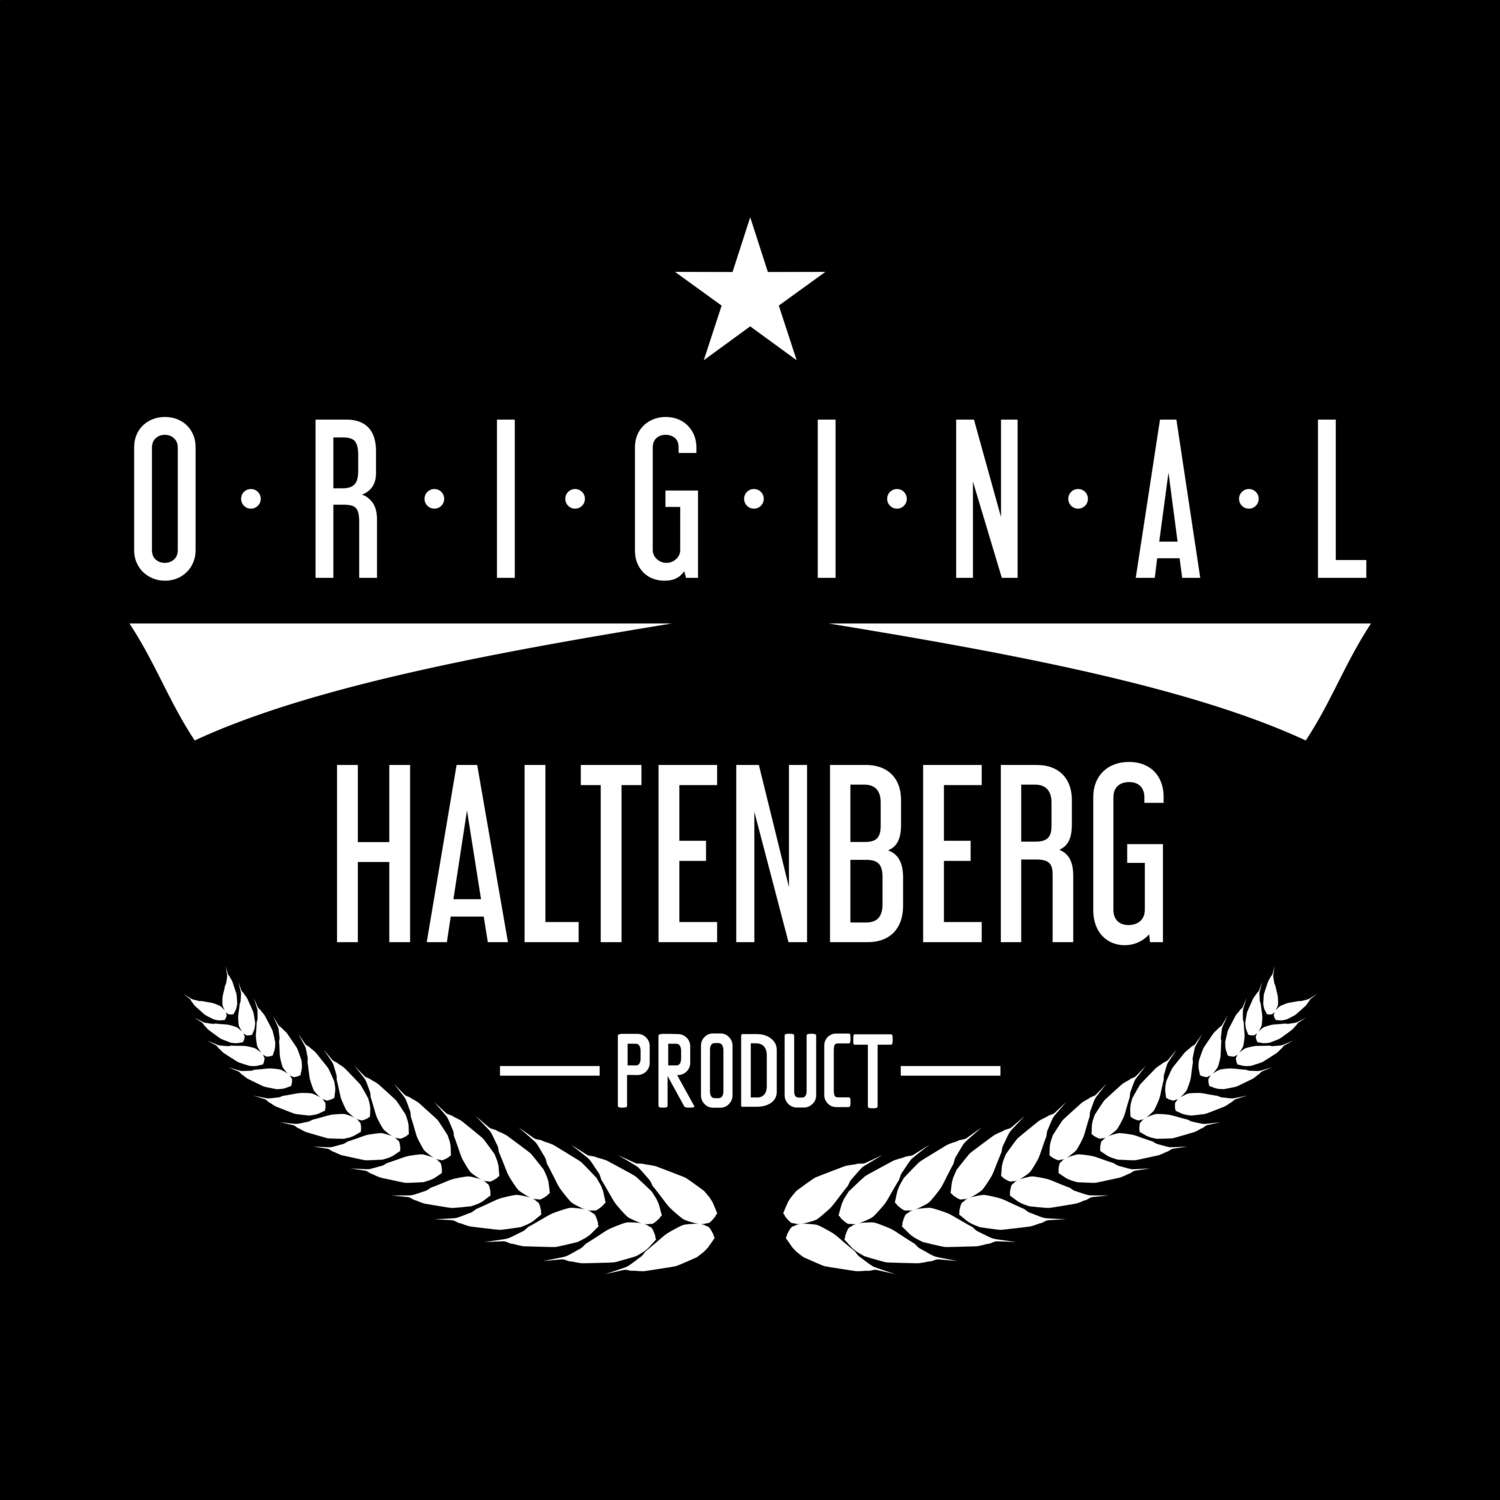 Haltenberg T-Shirt »Original Product«